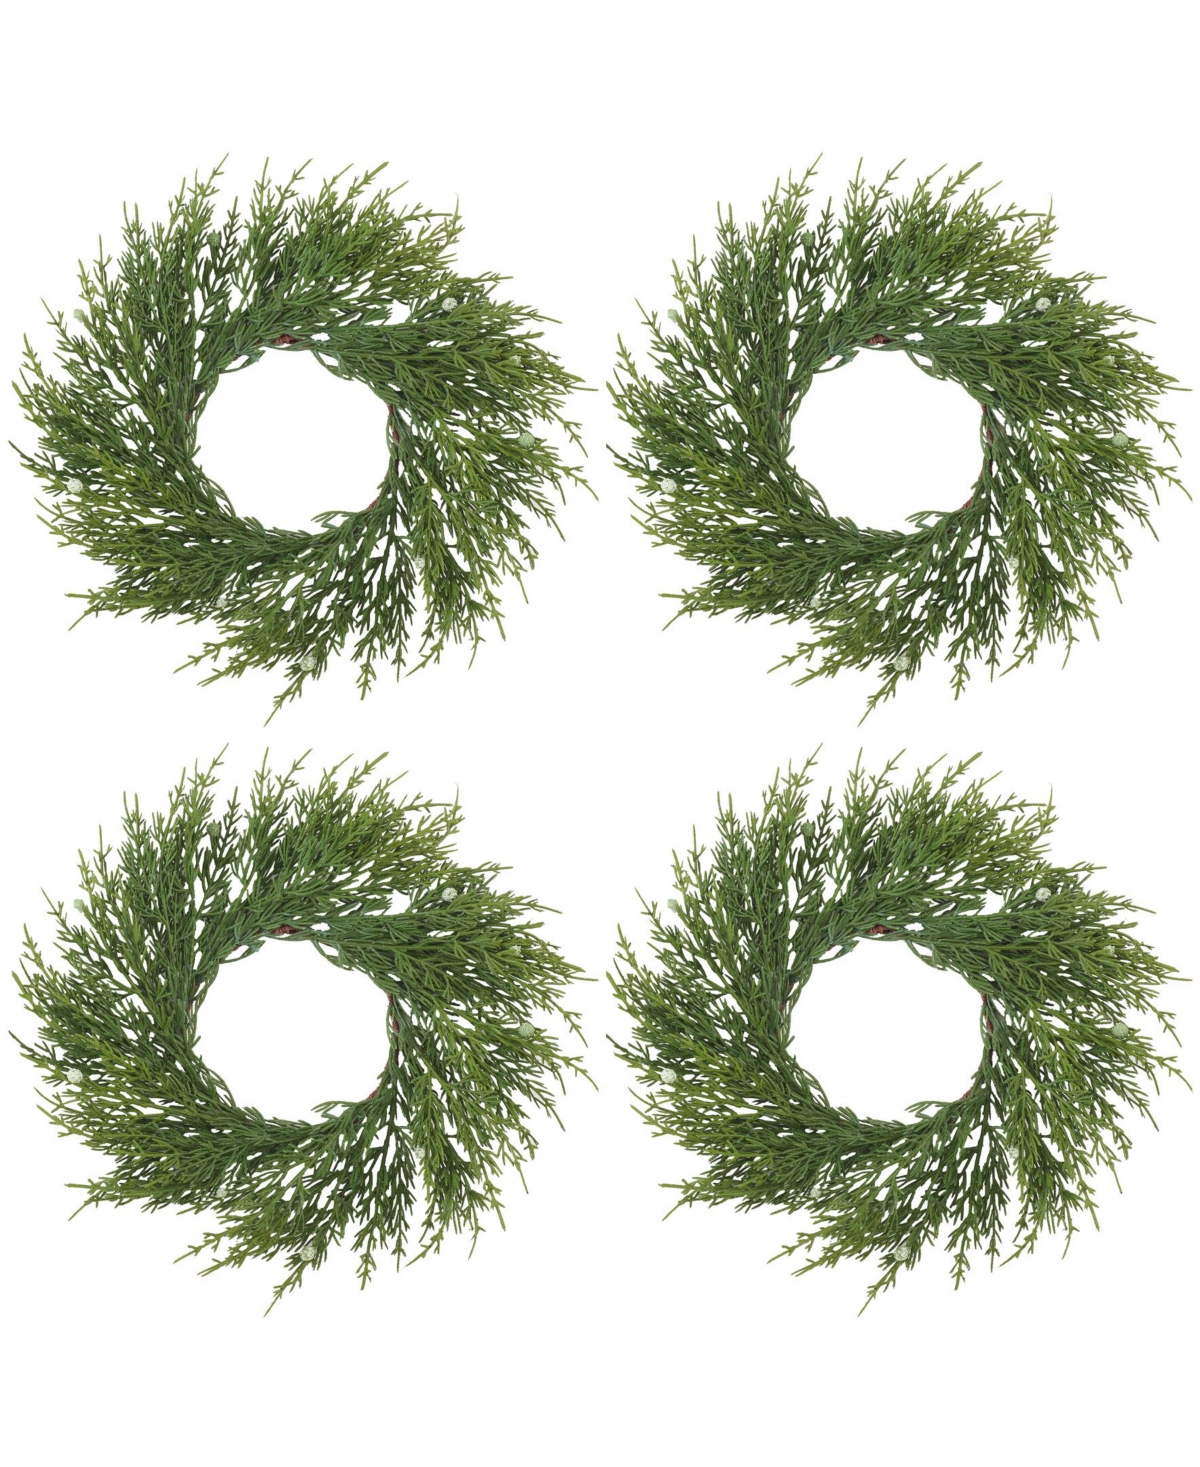 Faux Cypress Wreath Set of 4 - Green